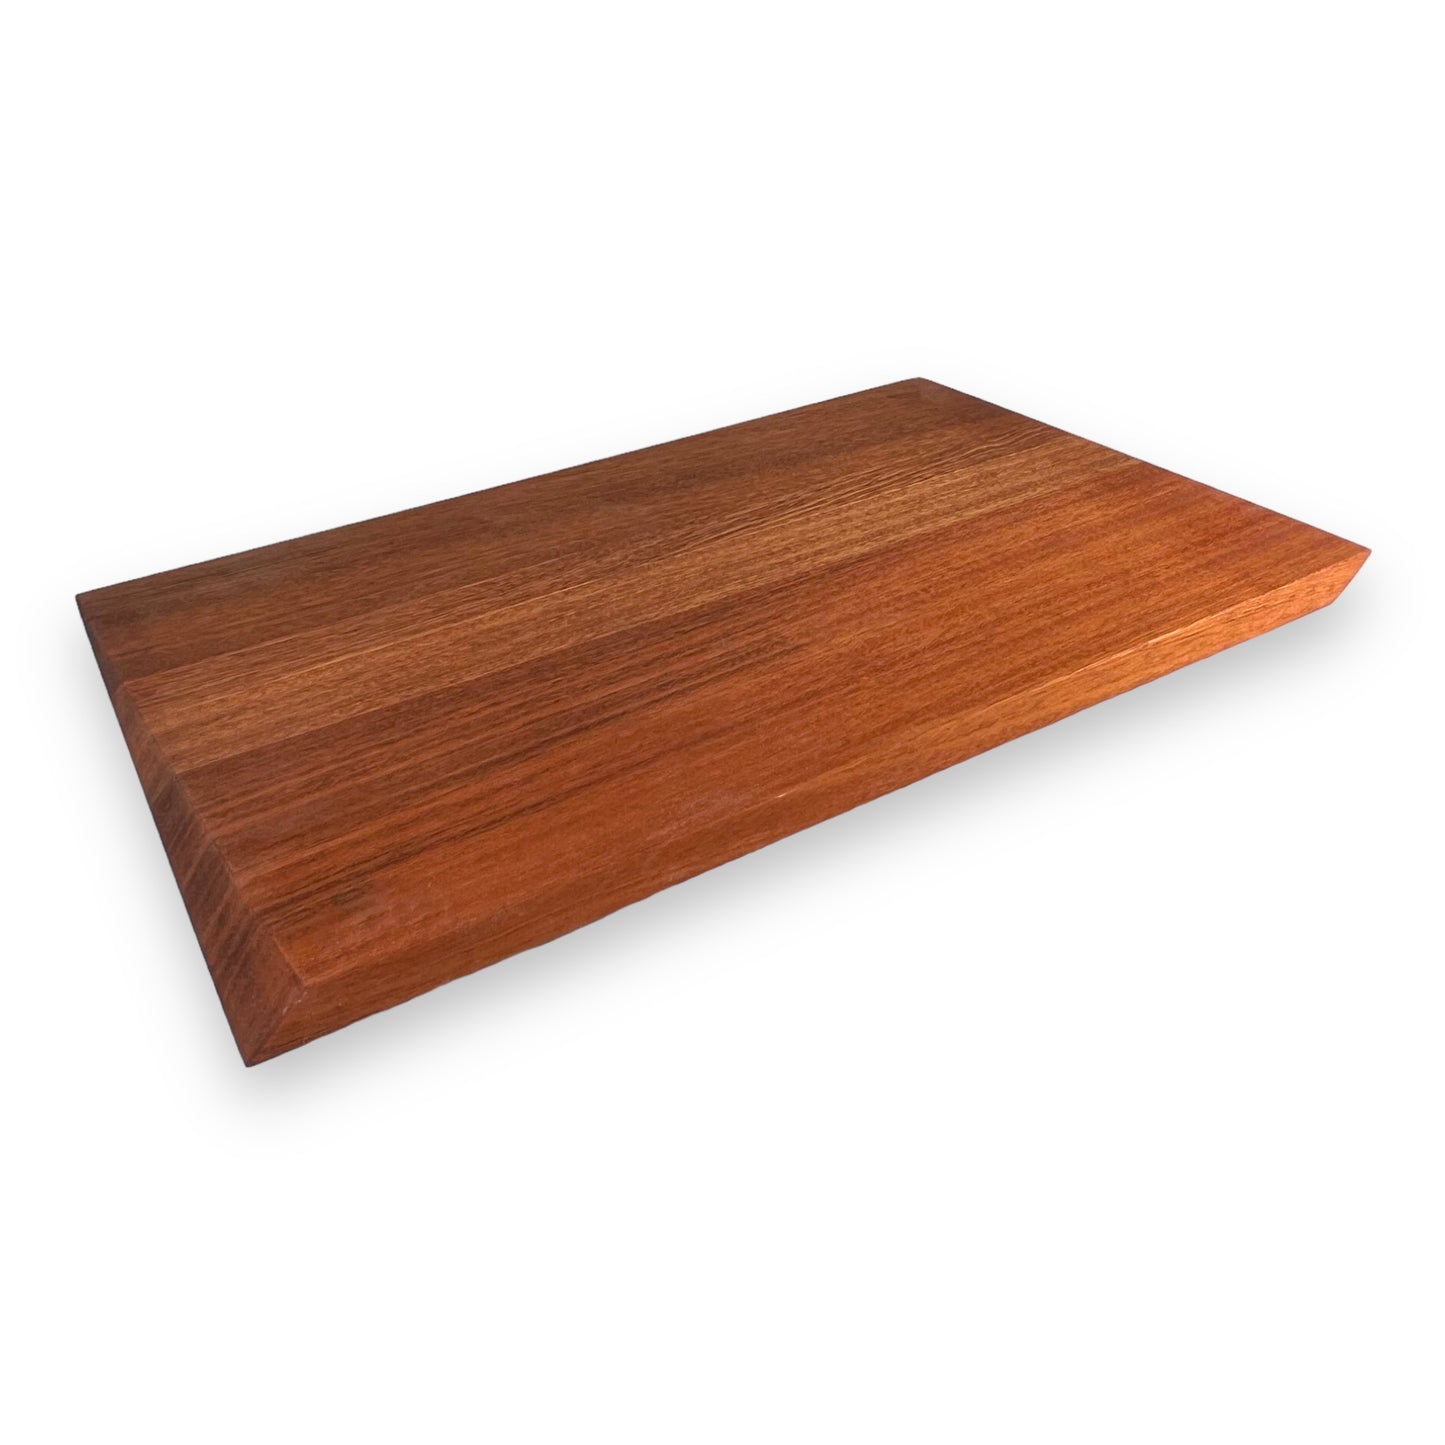 Sapele mahogany wood serving platter, Z-cut